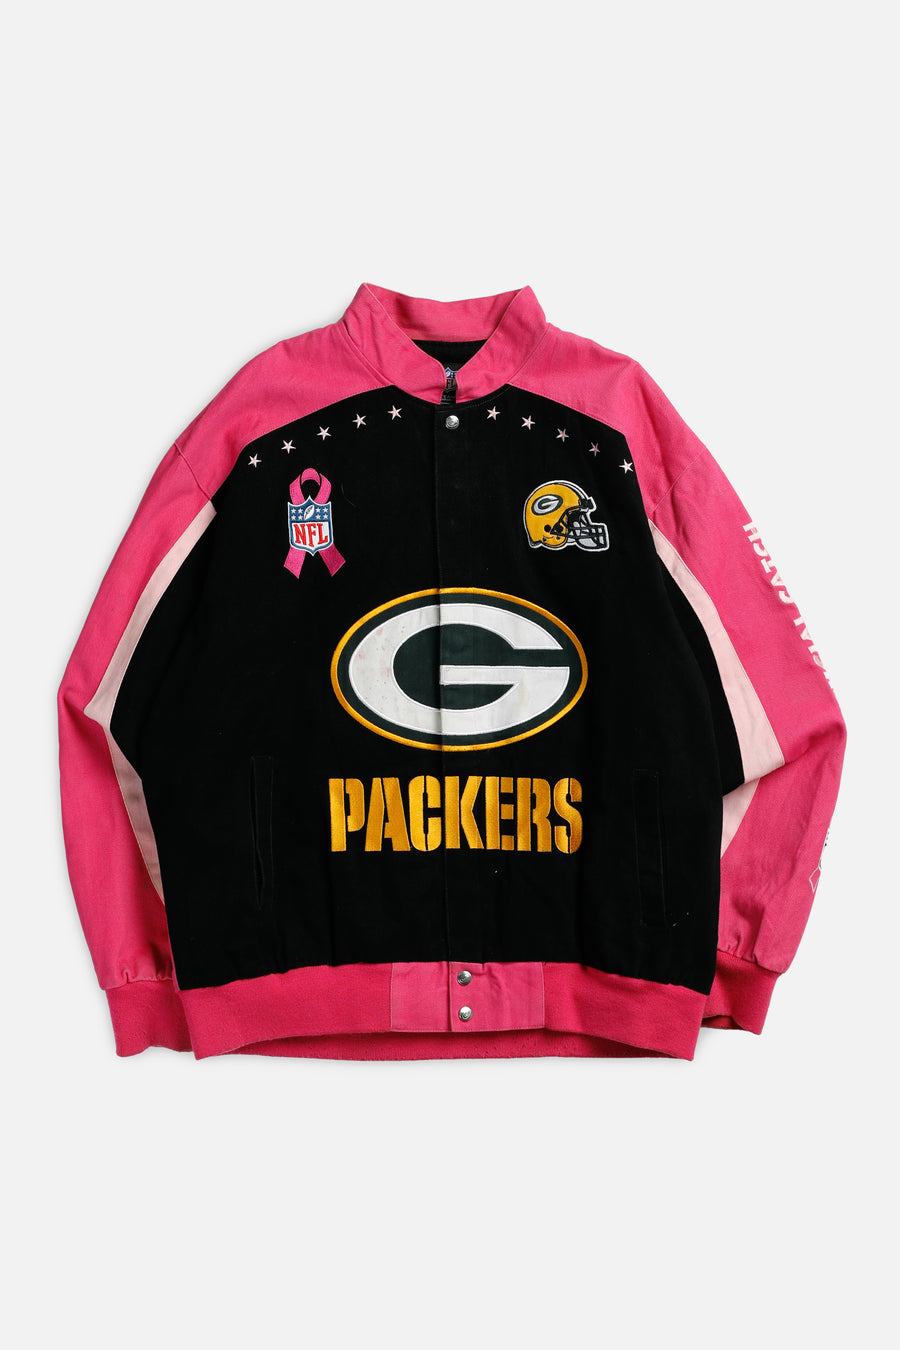 Vintage Green Bay Packers NFL Jacket - Women's XXXL